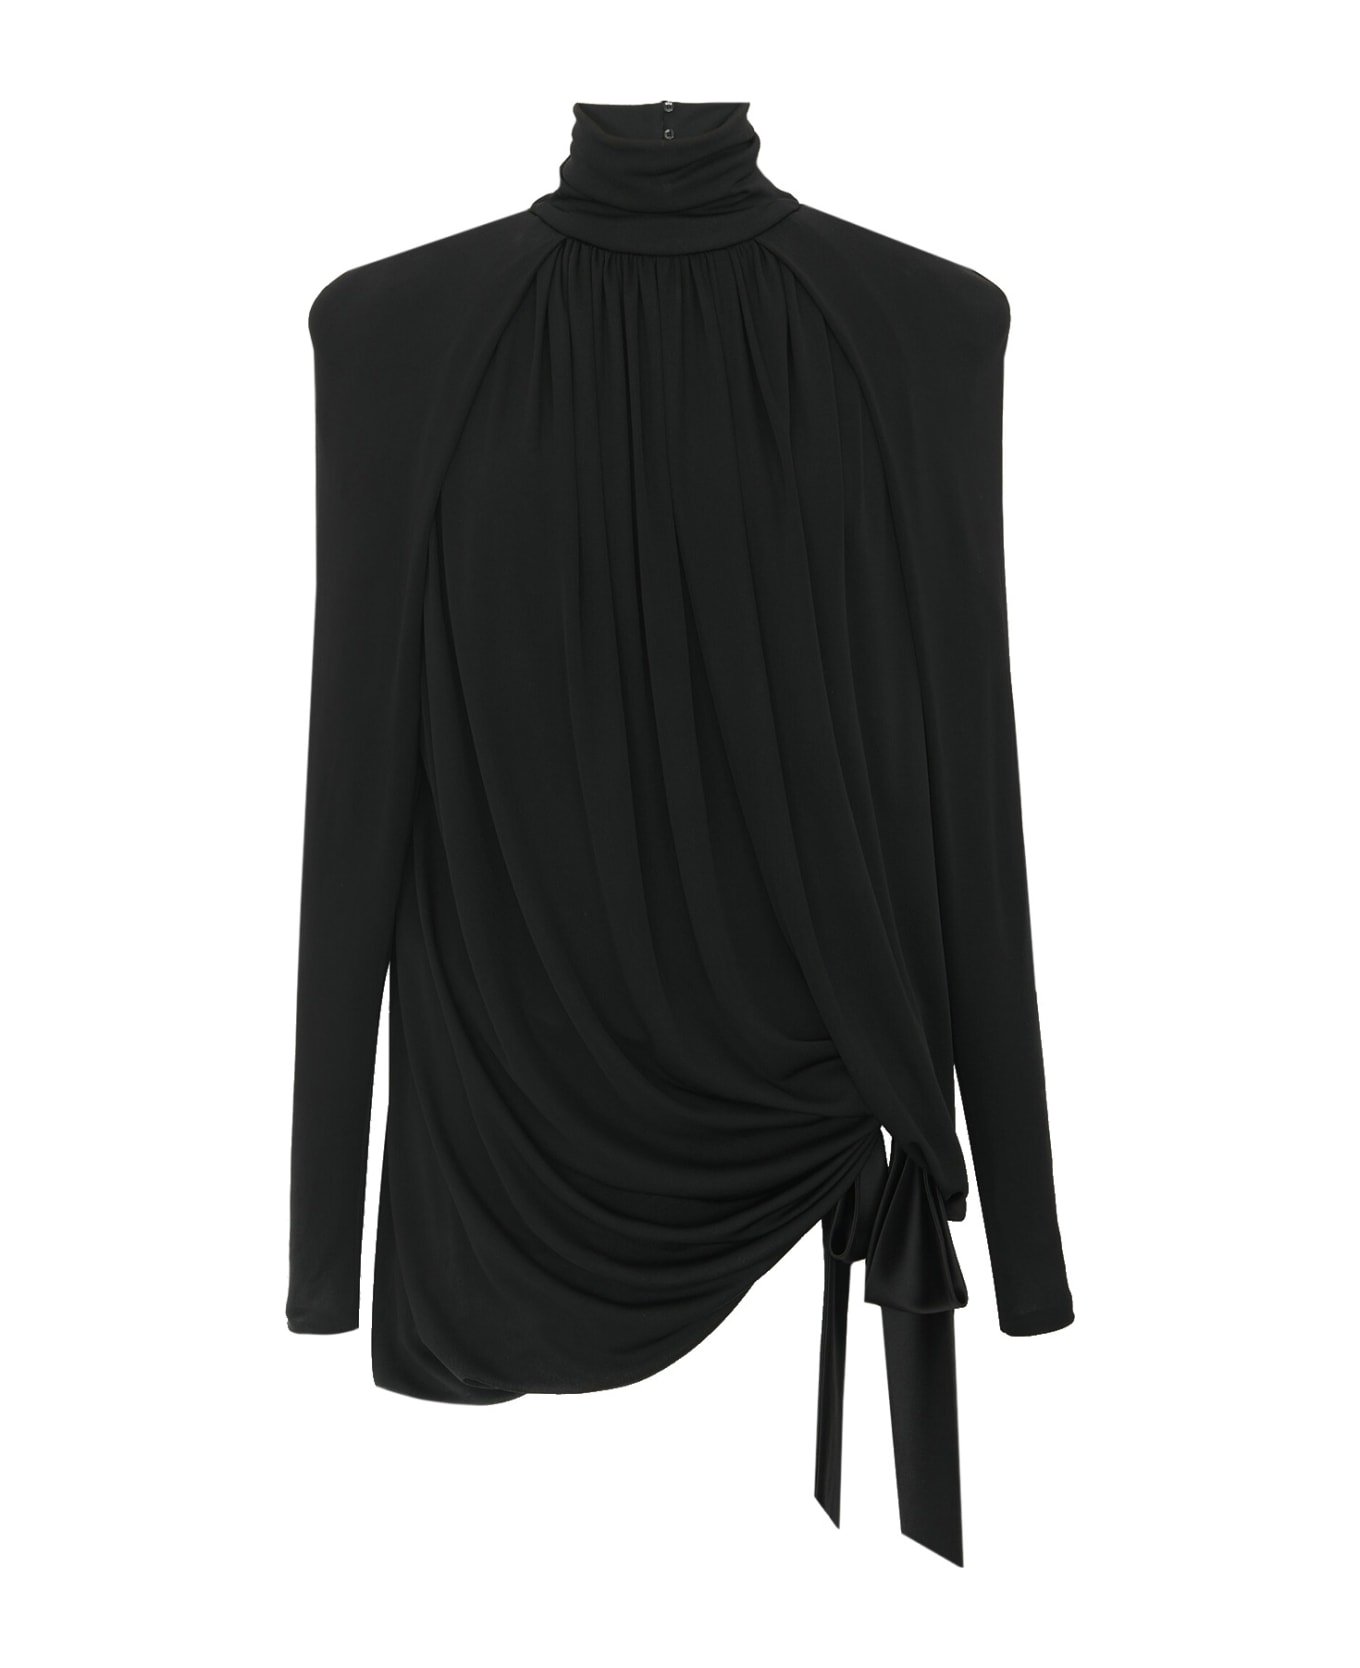 Saint Laurent Draped Jersey Dress - Black